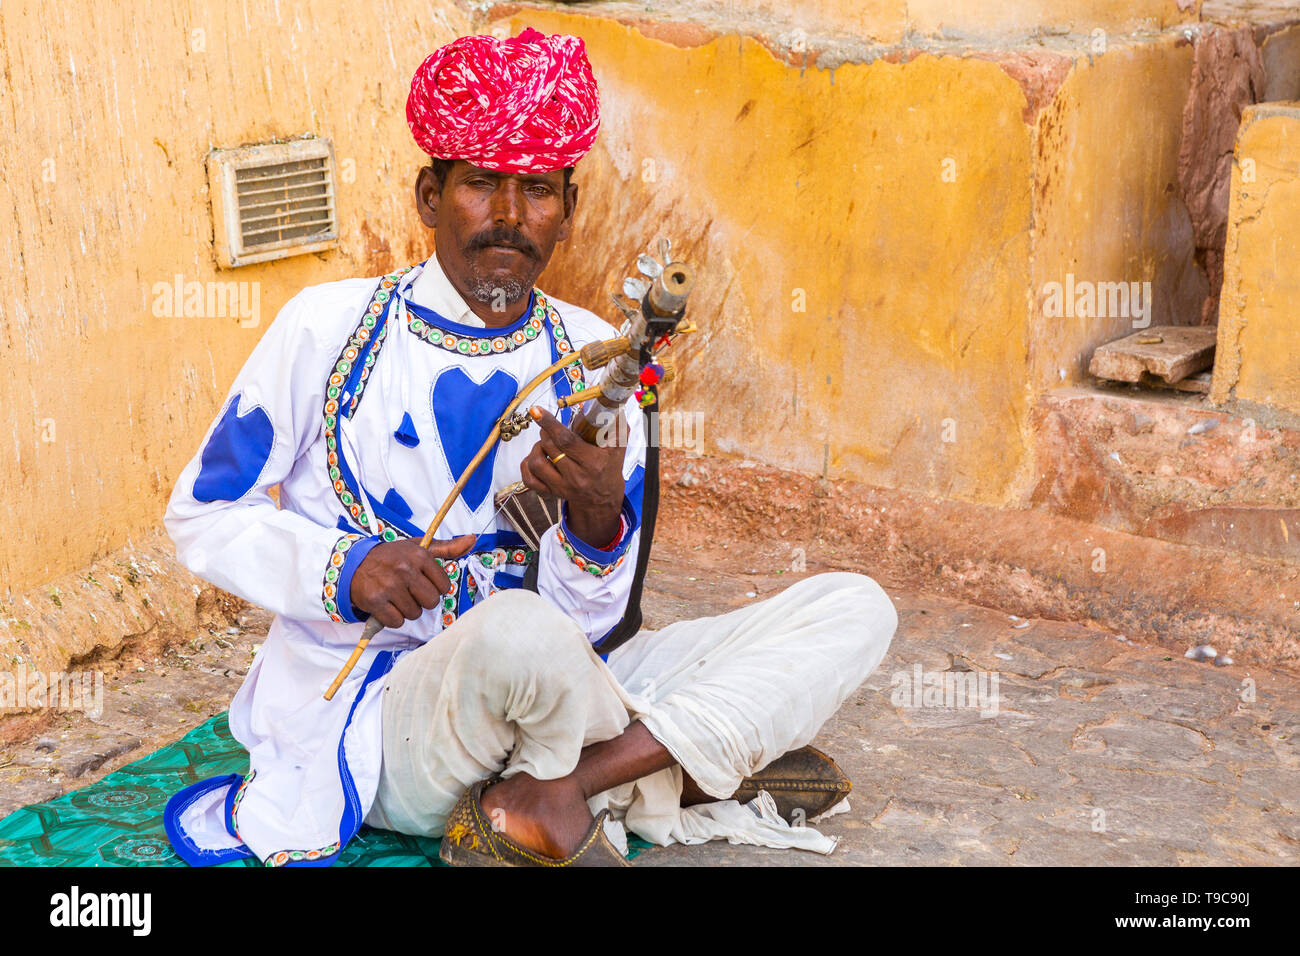 Jaipur, rajasthan, india - april 18th, 2018 : Indian village man playing traditional indian musical instrument ravanahatha at amer fort. - Image Stock Photo